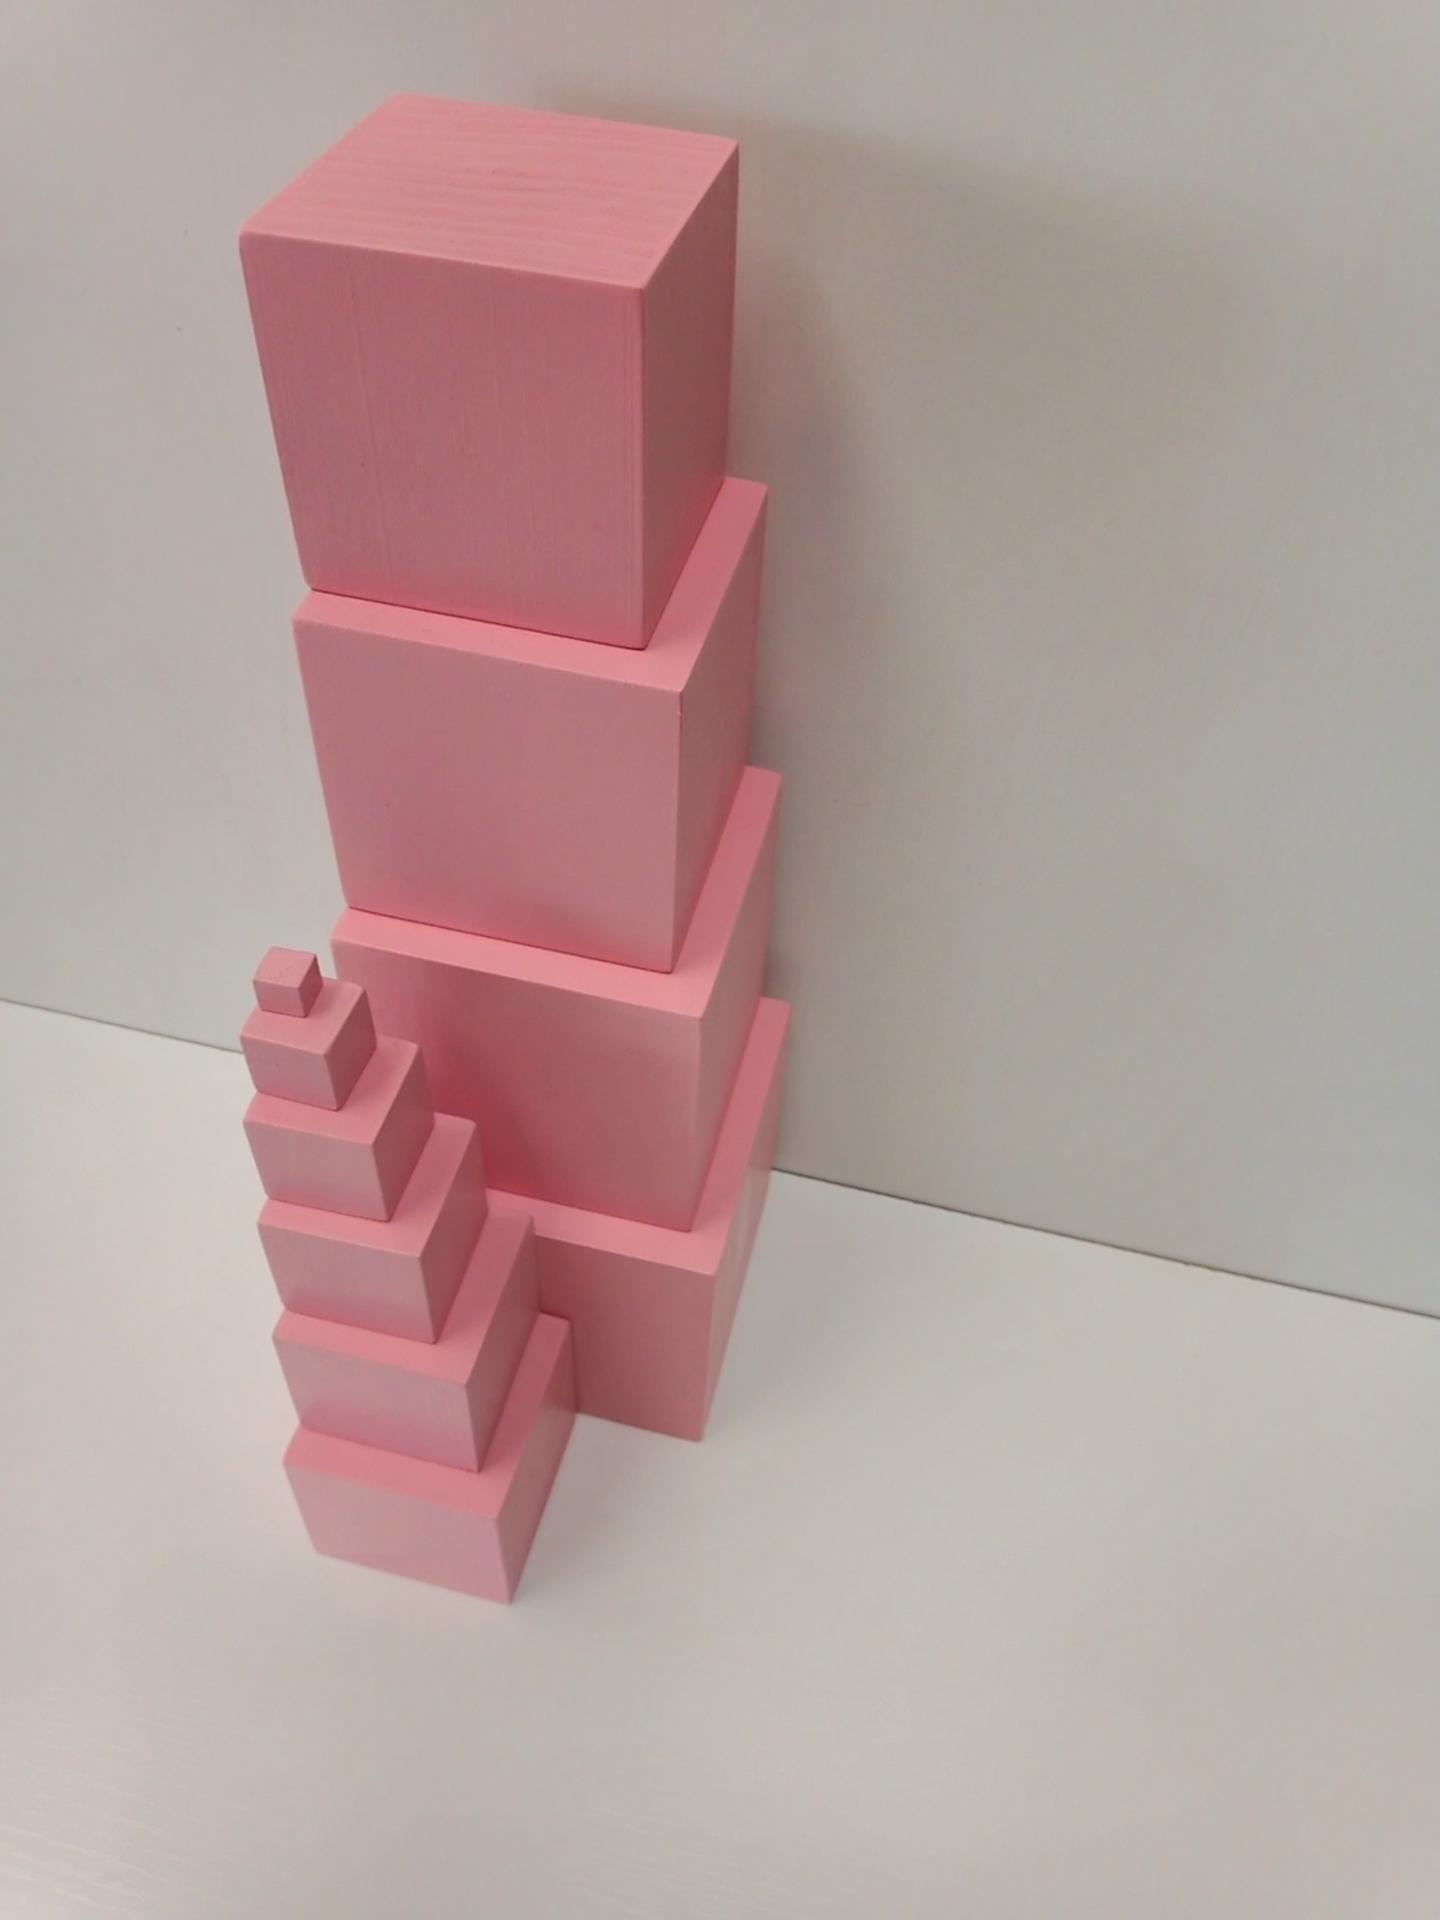 Tour rose Montessori - cubes roses de 10 x 10 cm à empiler